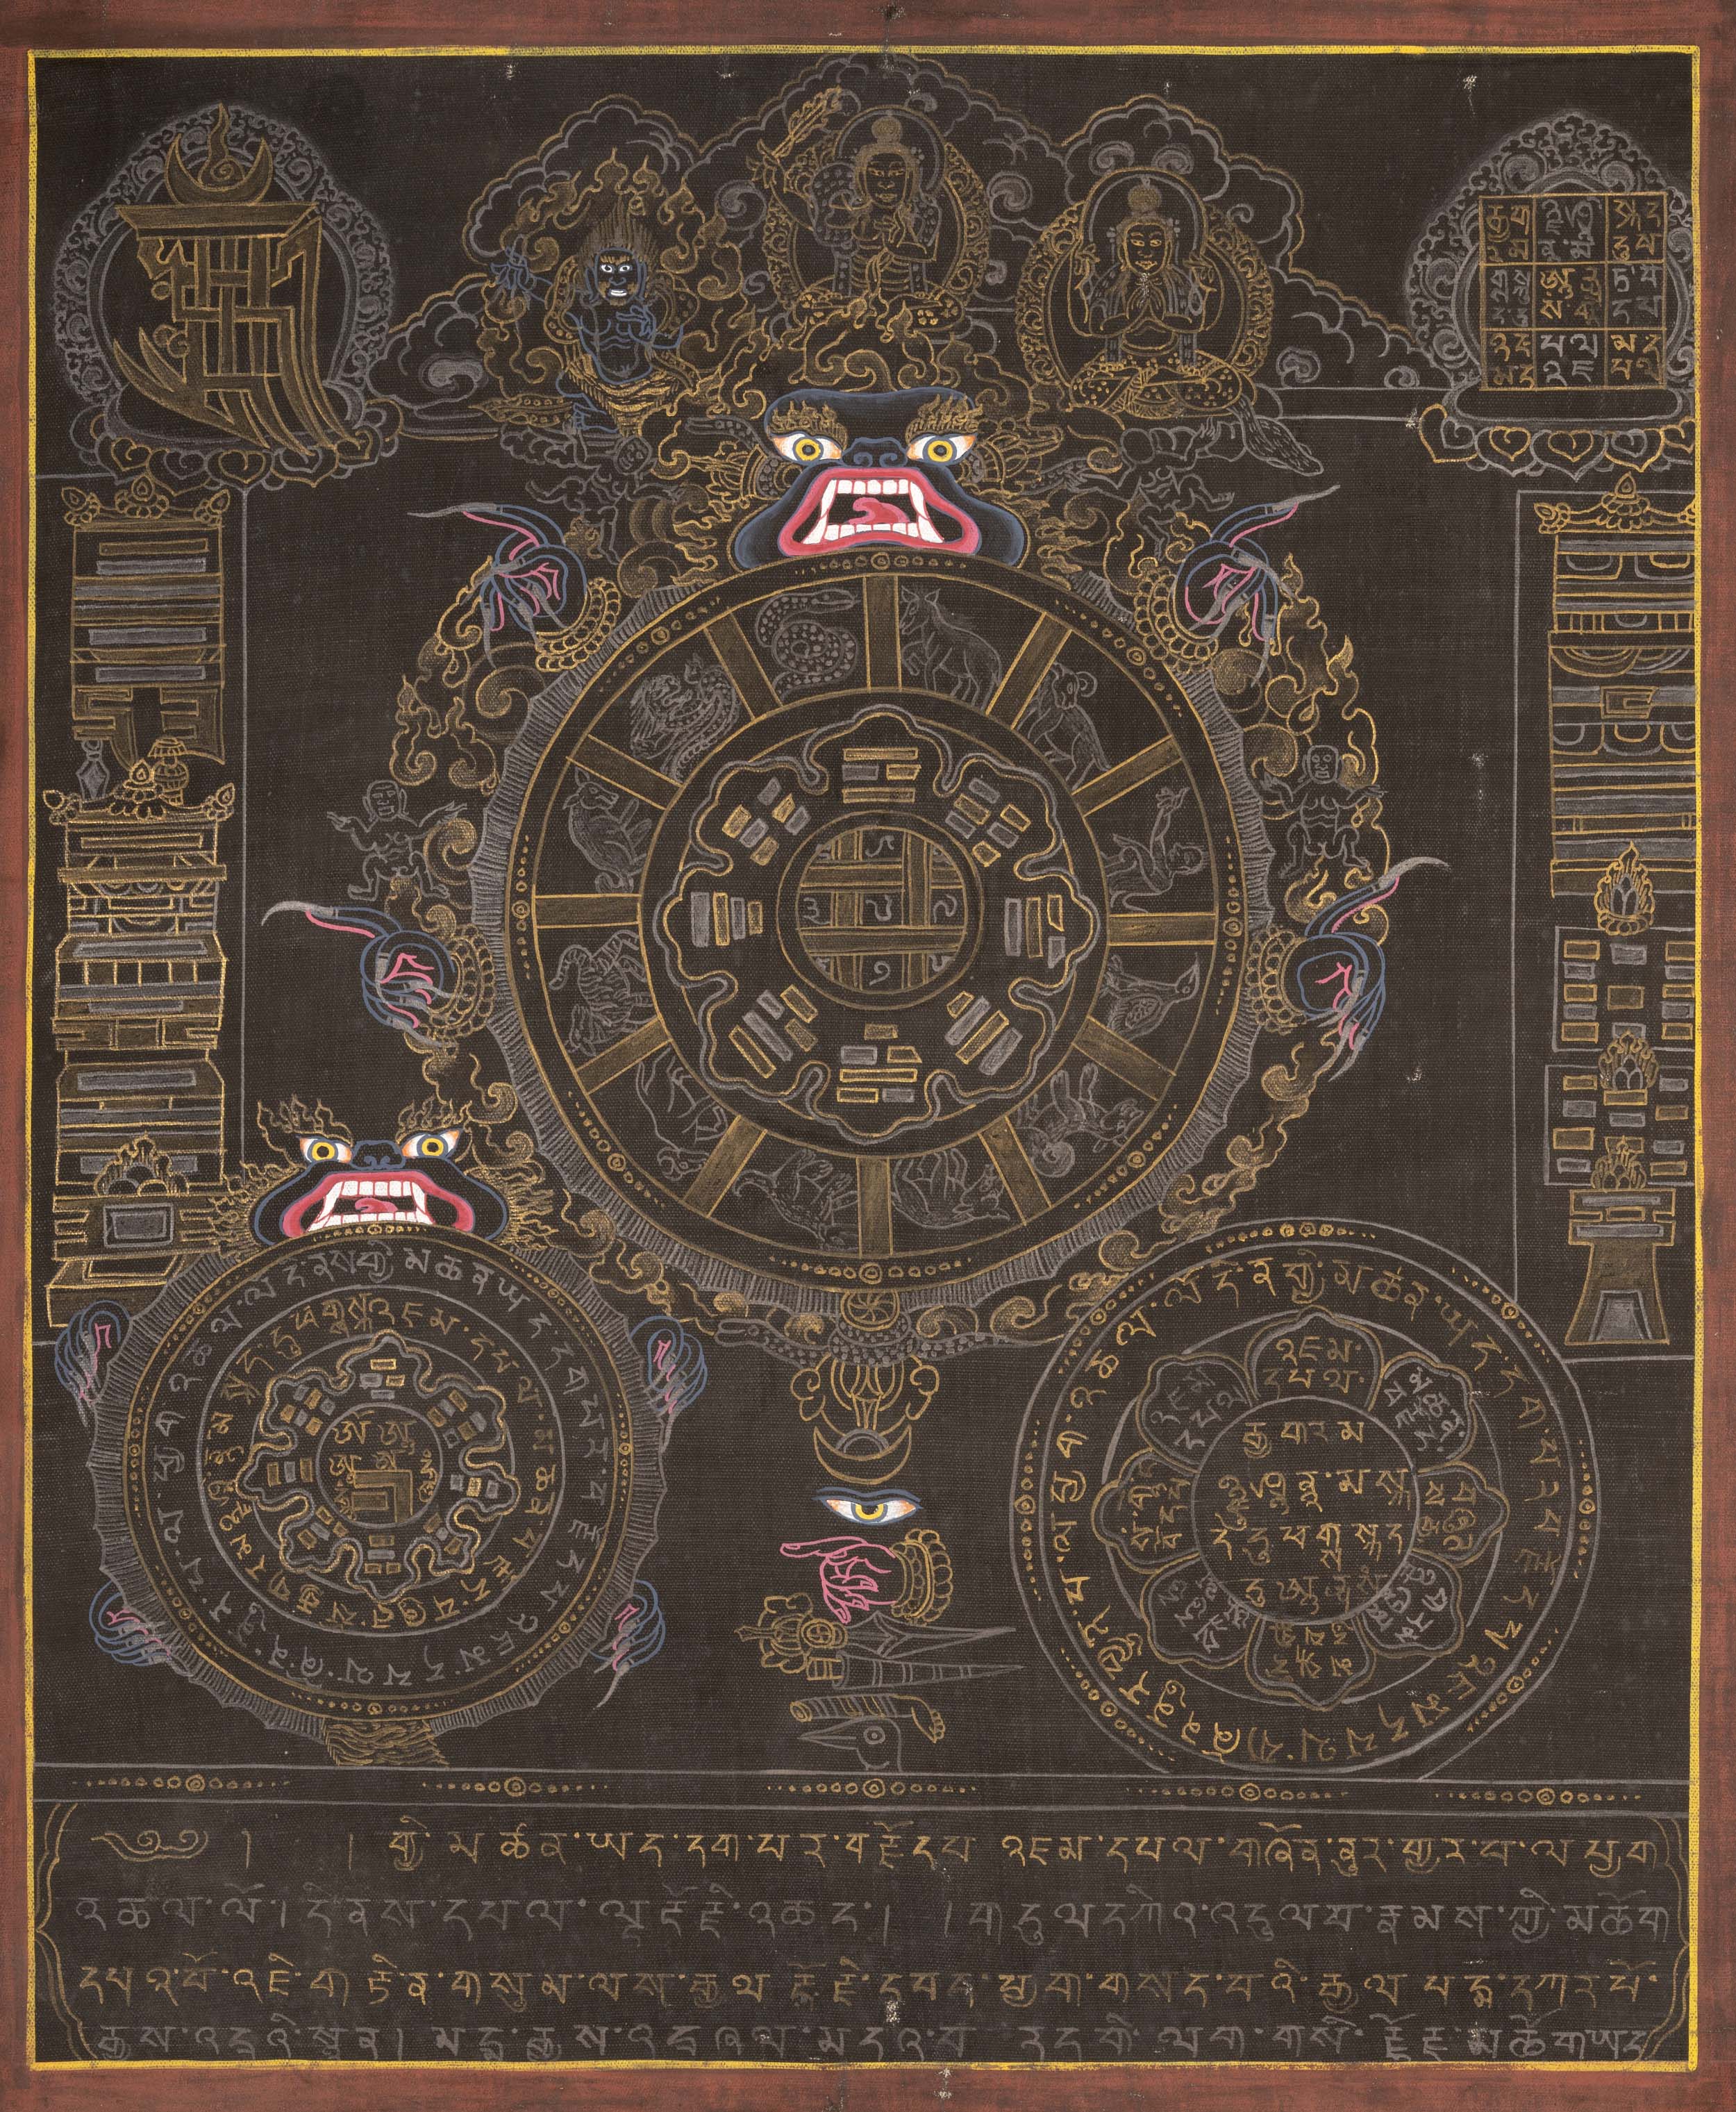 30 + Year Original Hand-Painted Tibetan Calendar Thanka | Old Astrological Chart